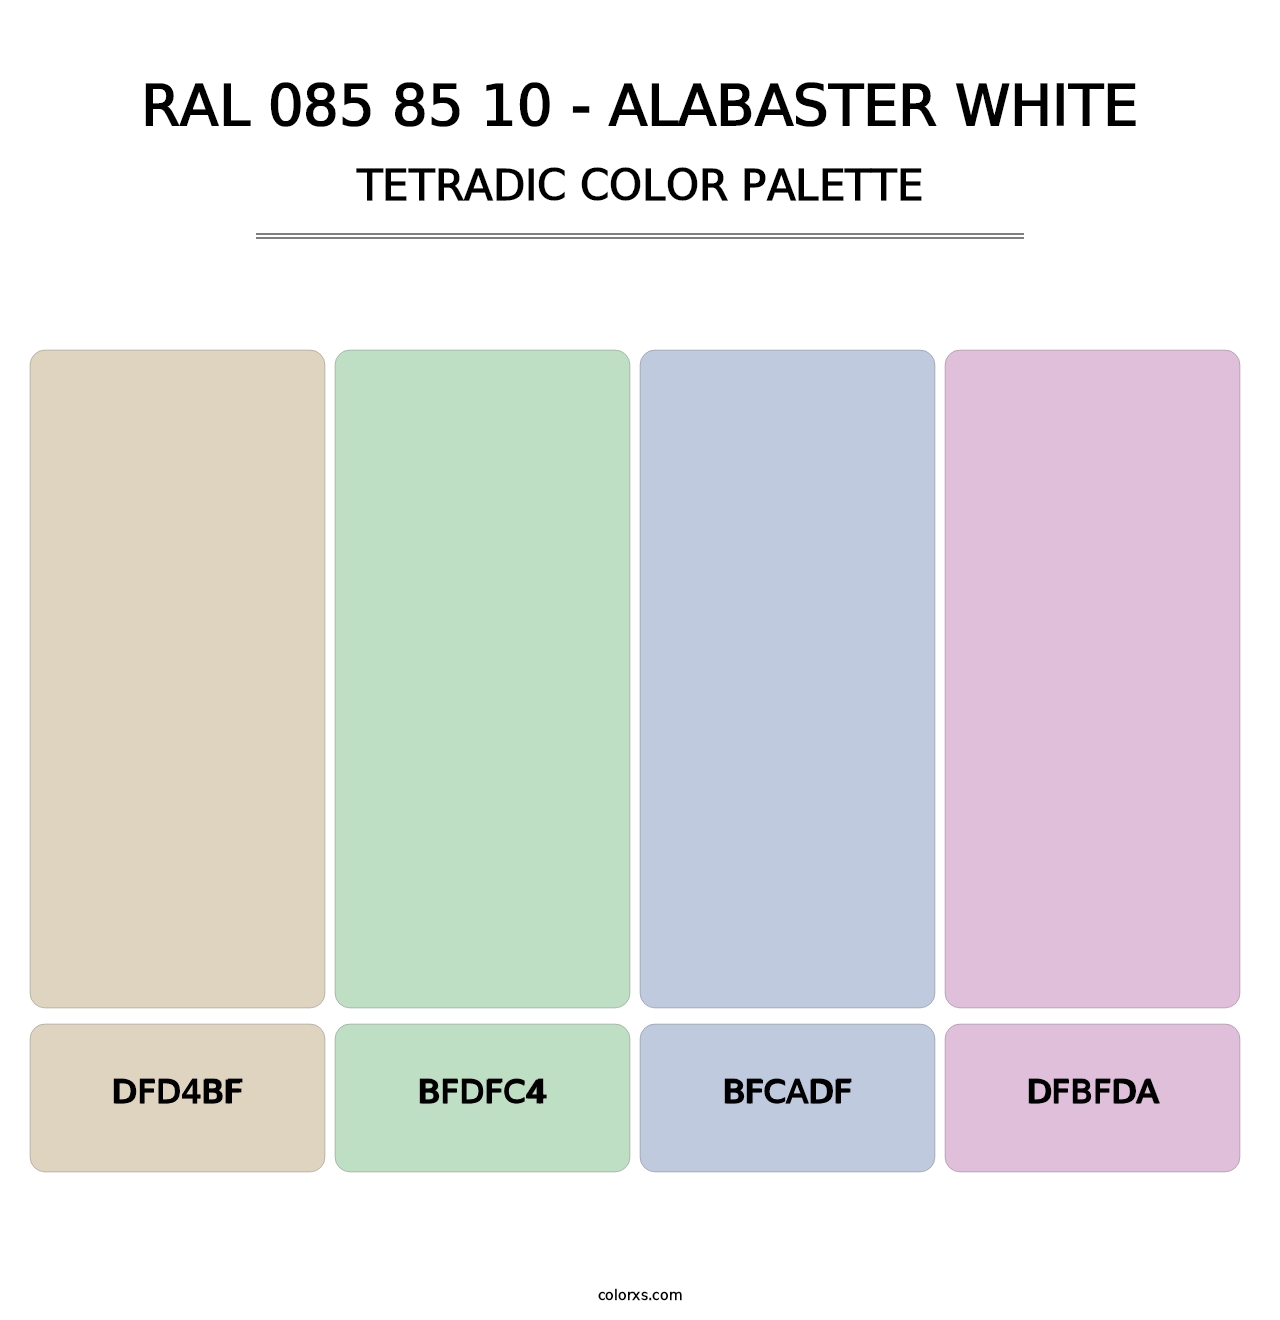 RAL 085 85 10 - Alabaster White - Tetradic Color Palette